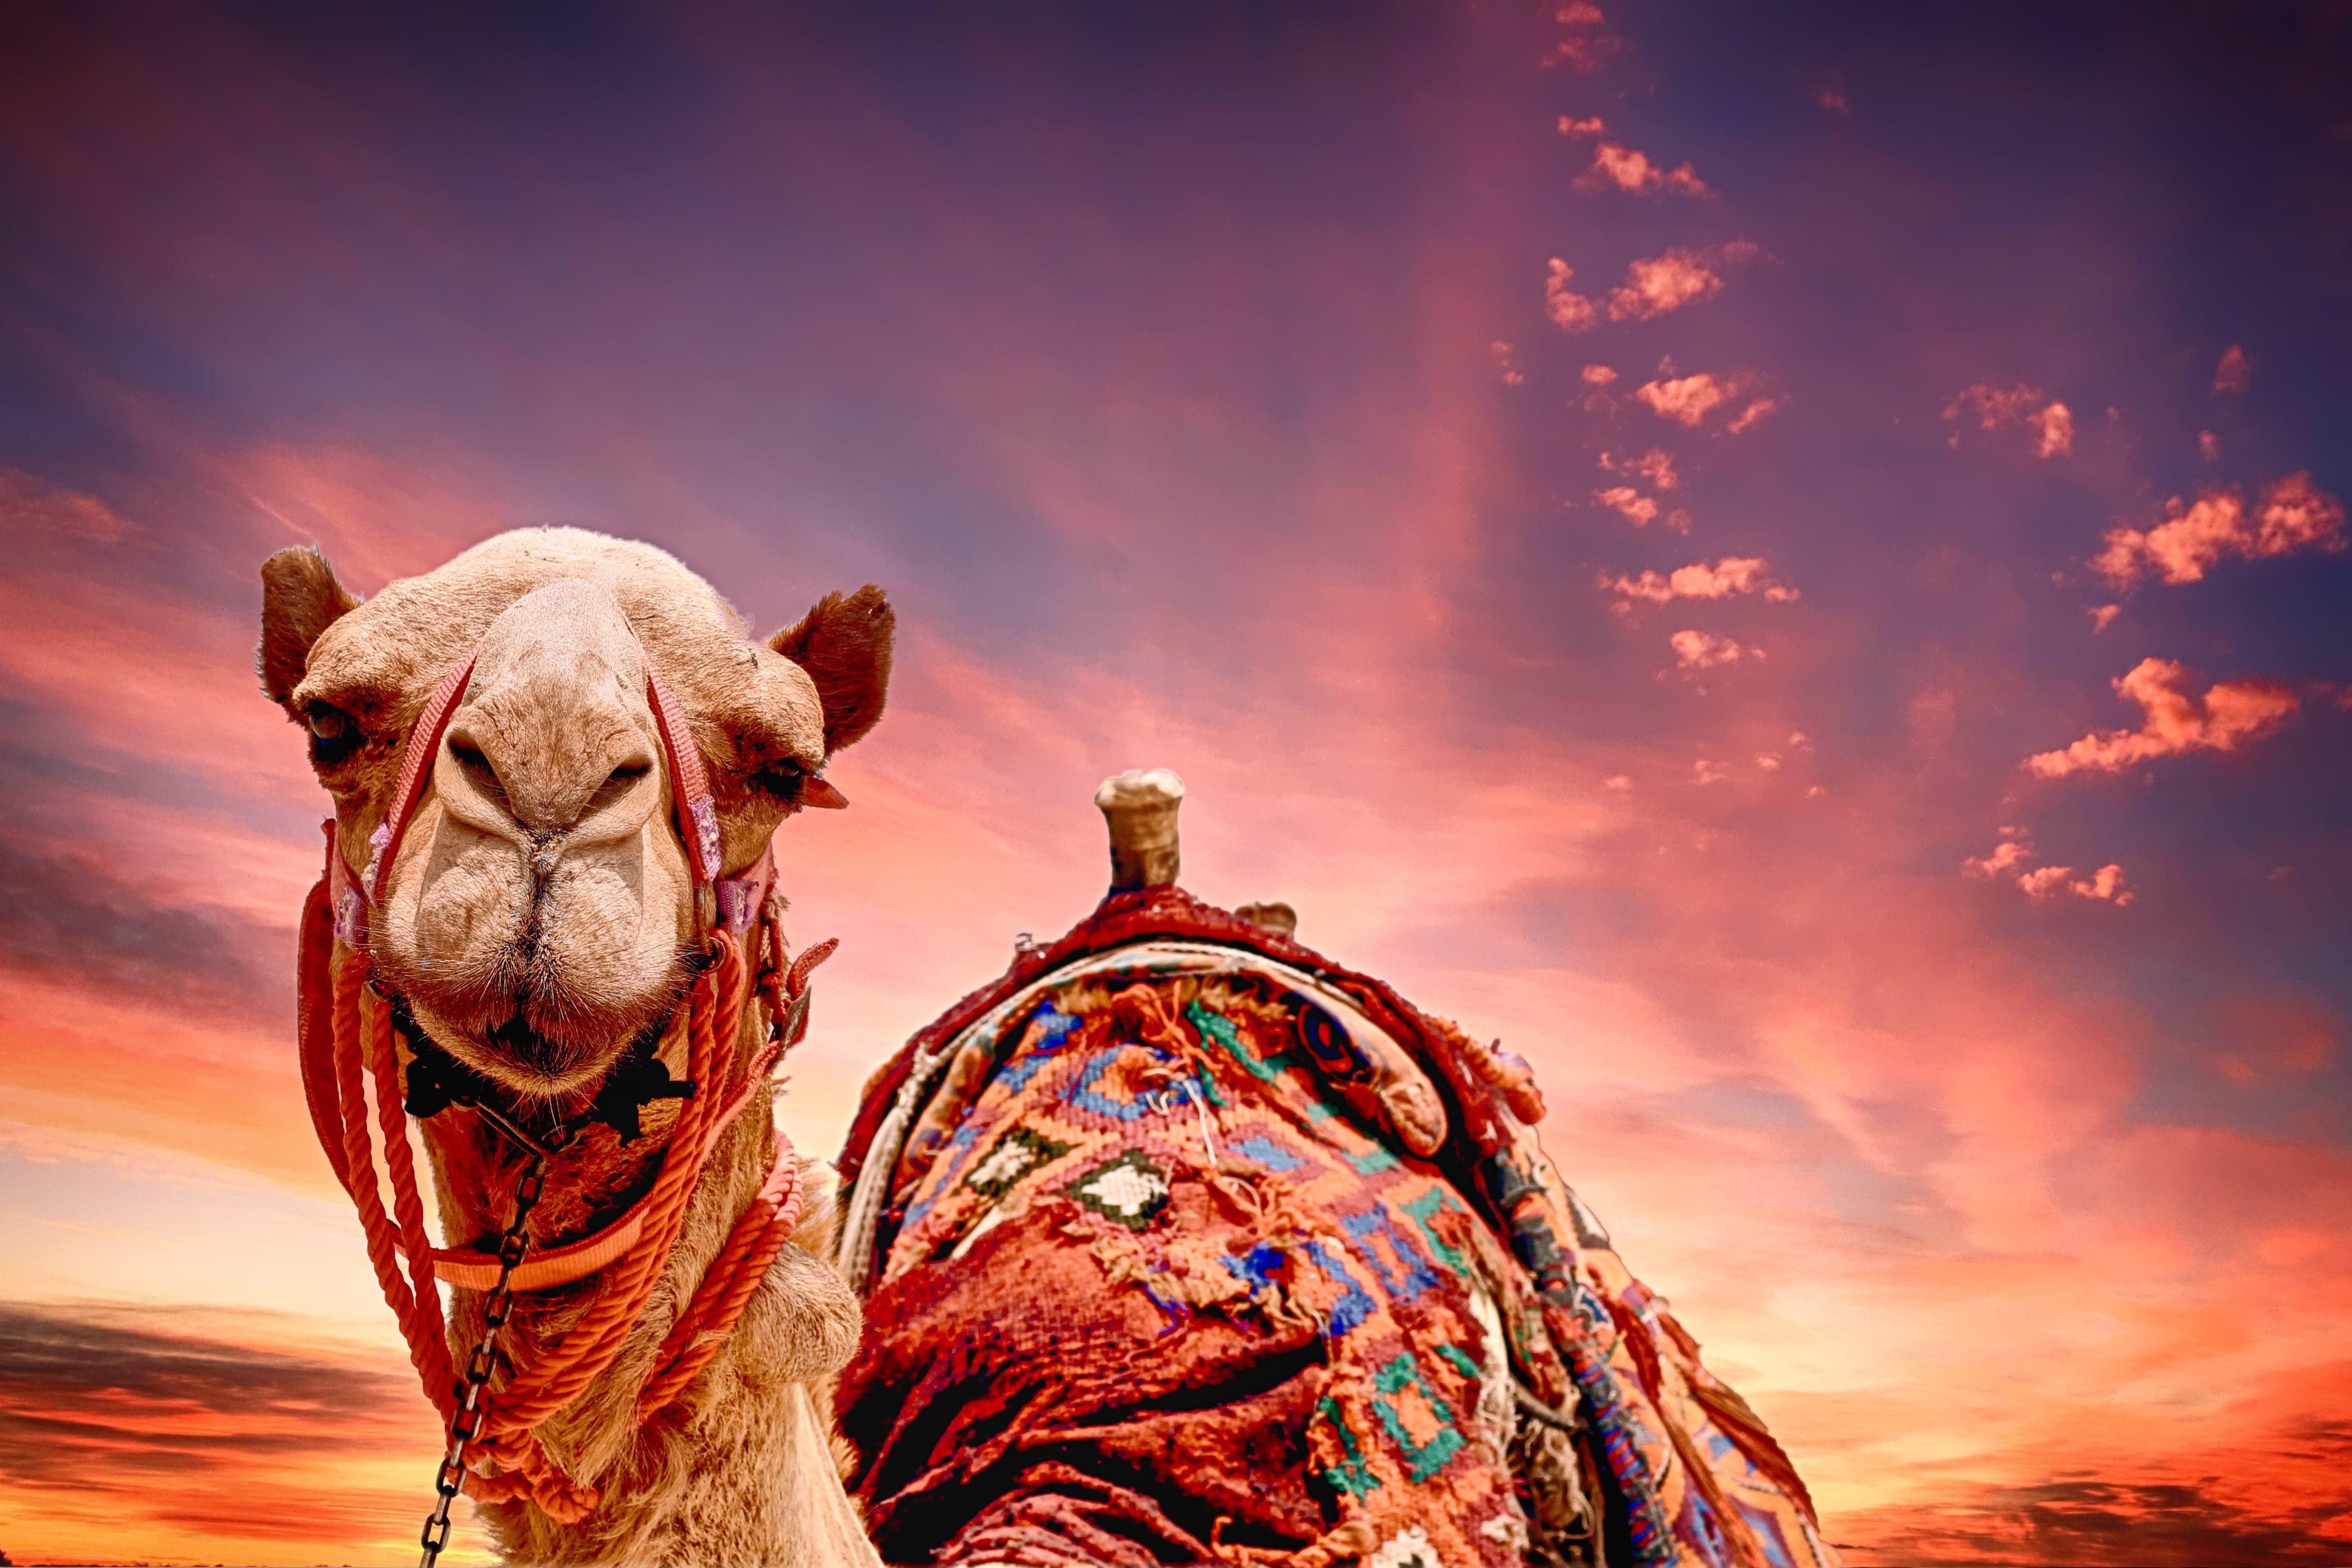 100+ Camel Images [HD] | Download Free Pictures On Unsplash